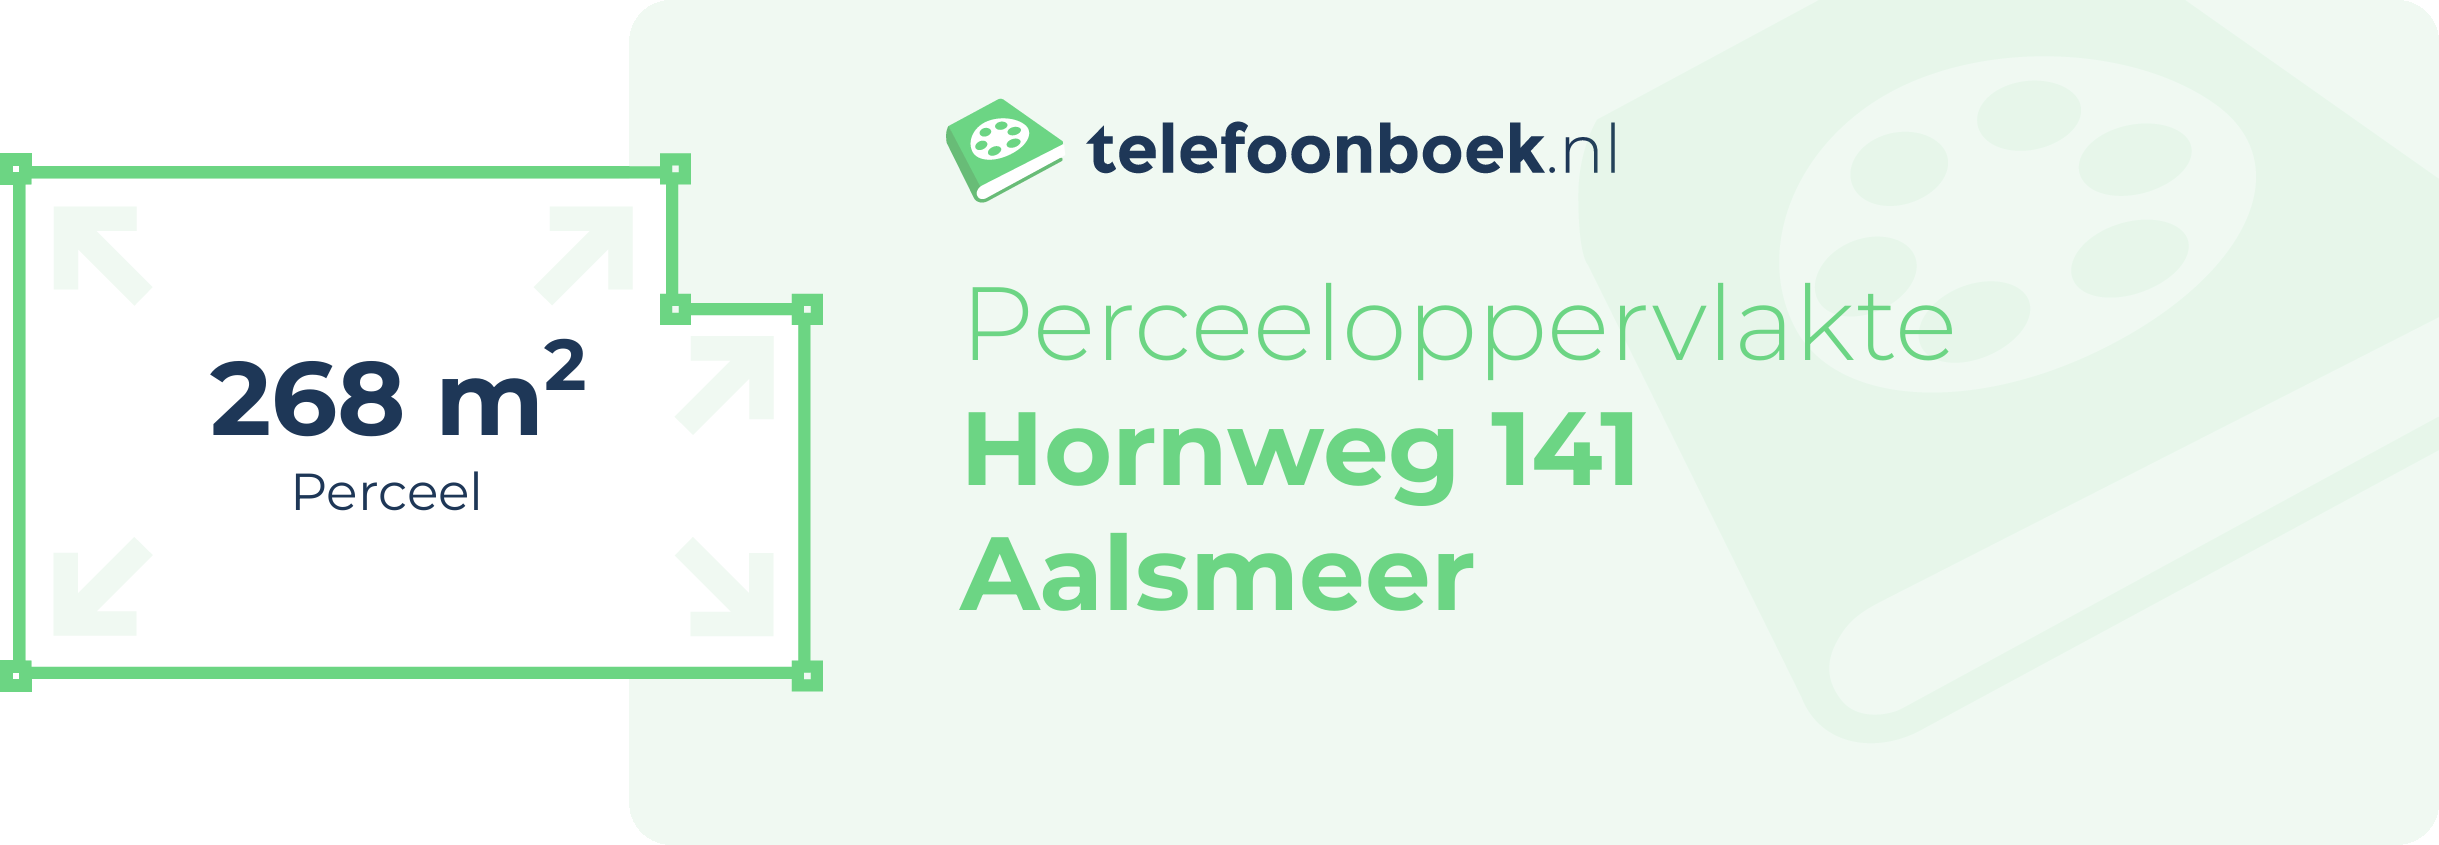 Perceeloppervlakte Hornweg 141 Aalsmeer